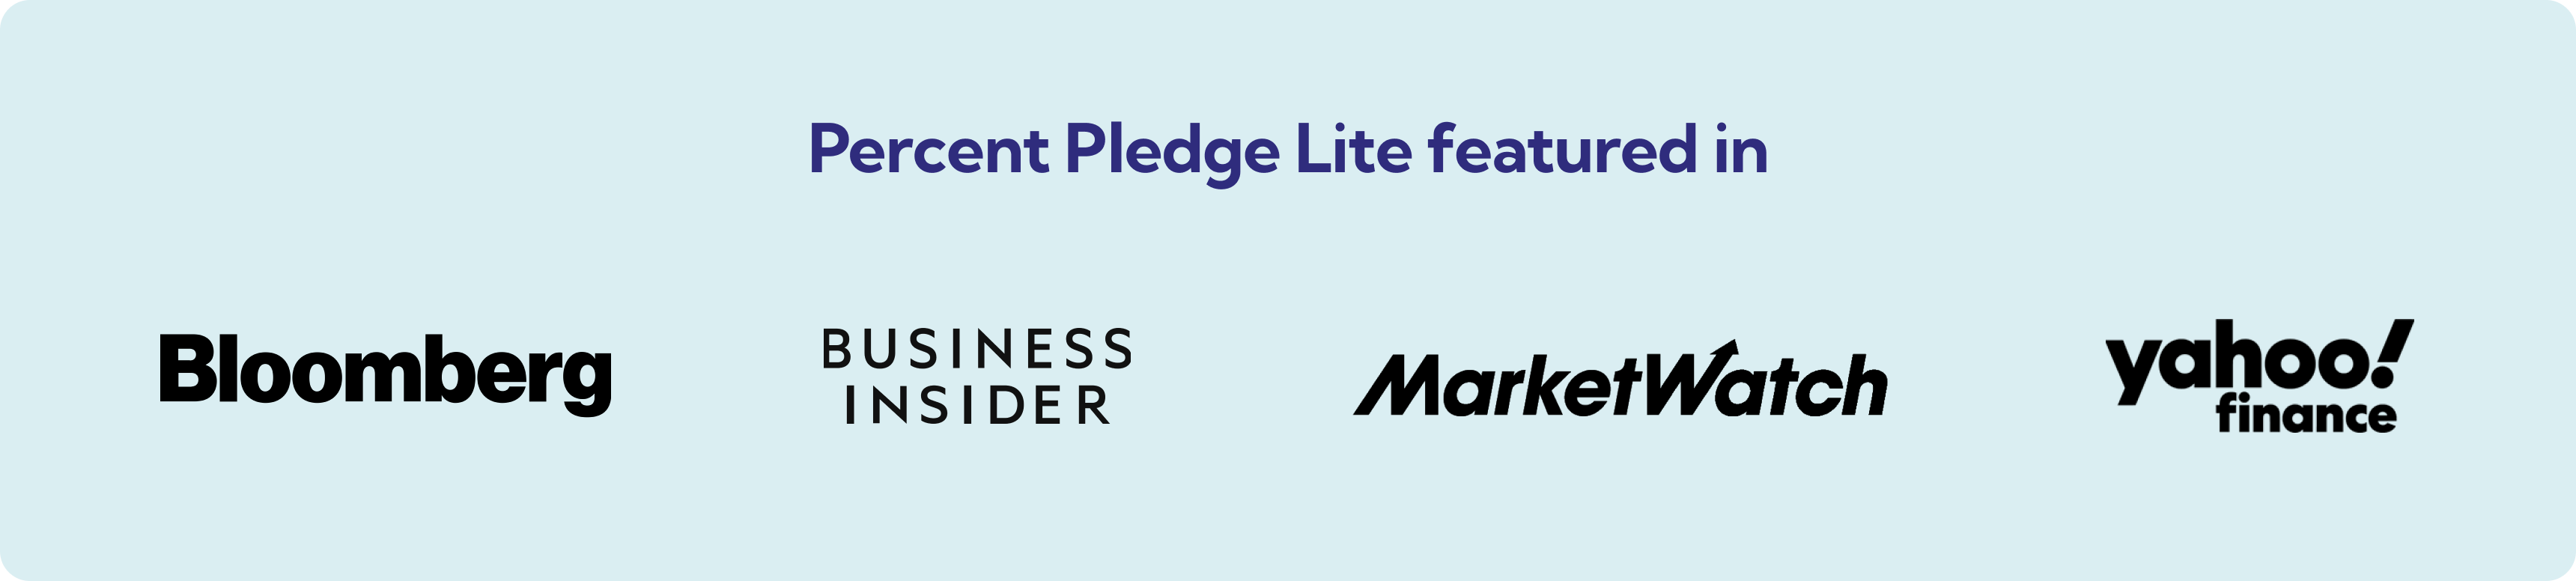 Percent Pledge Lite featured in